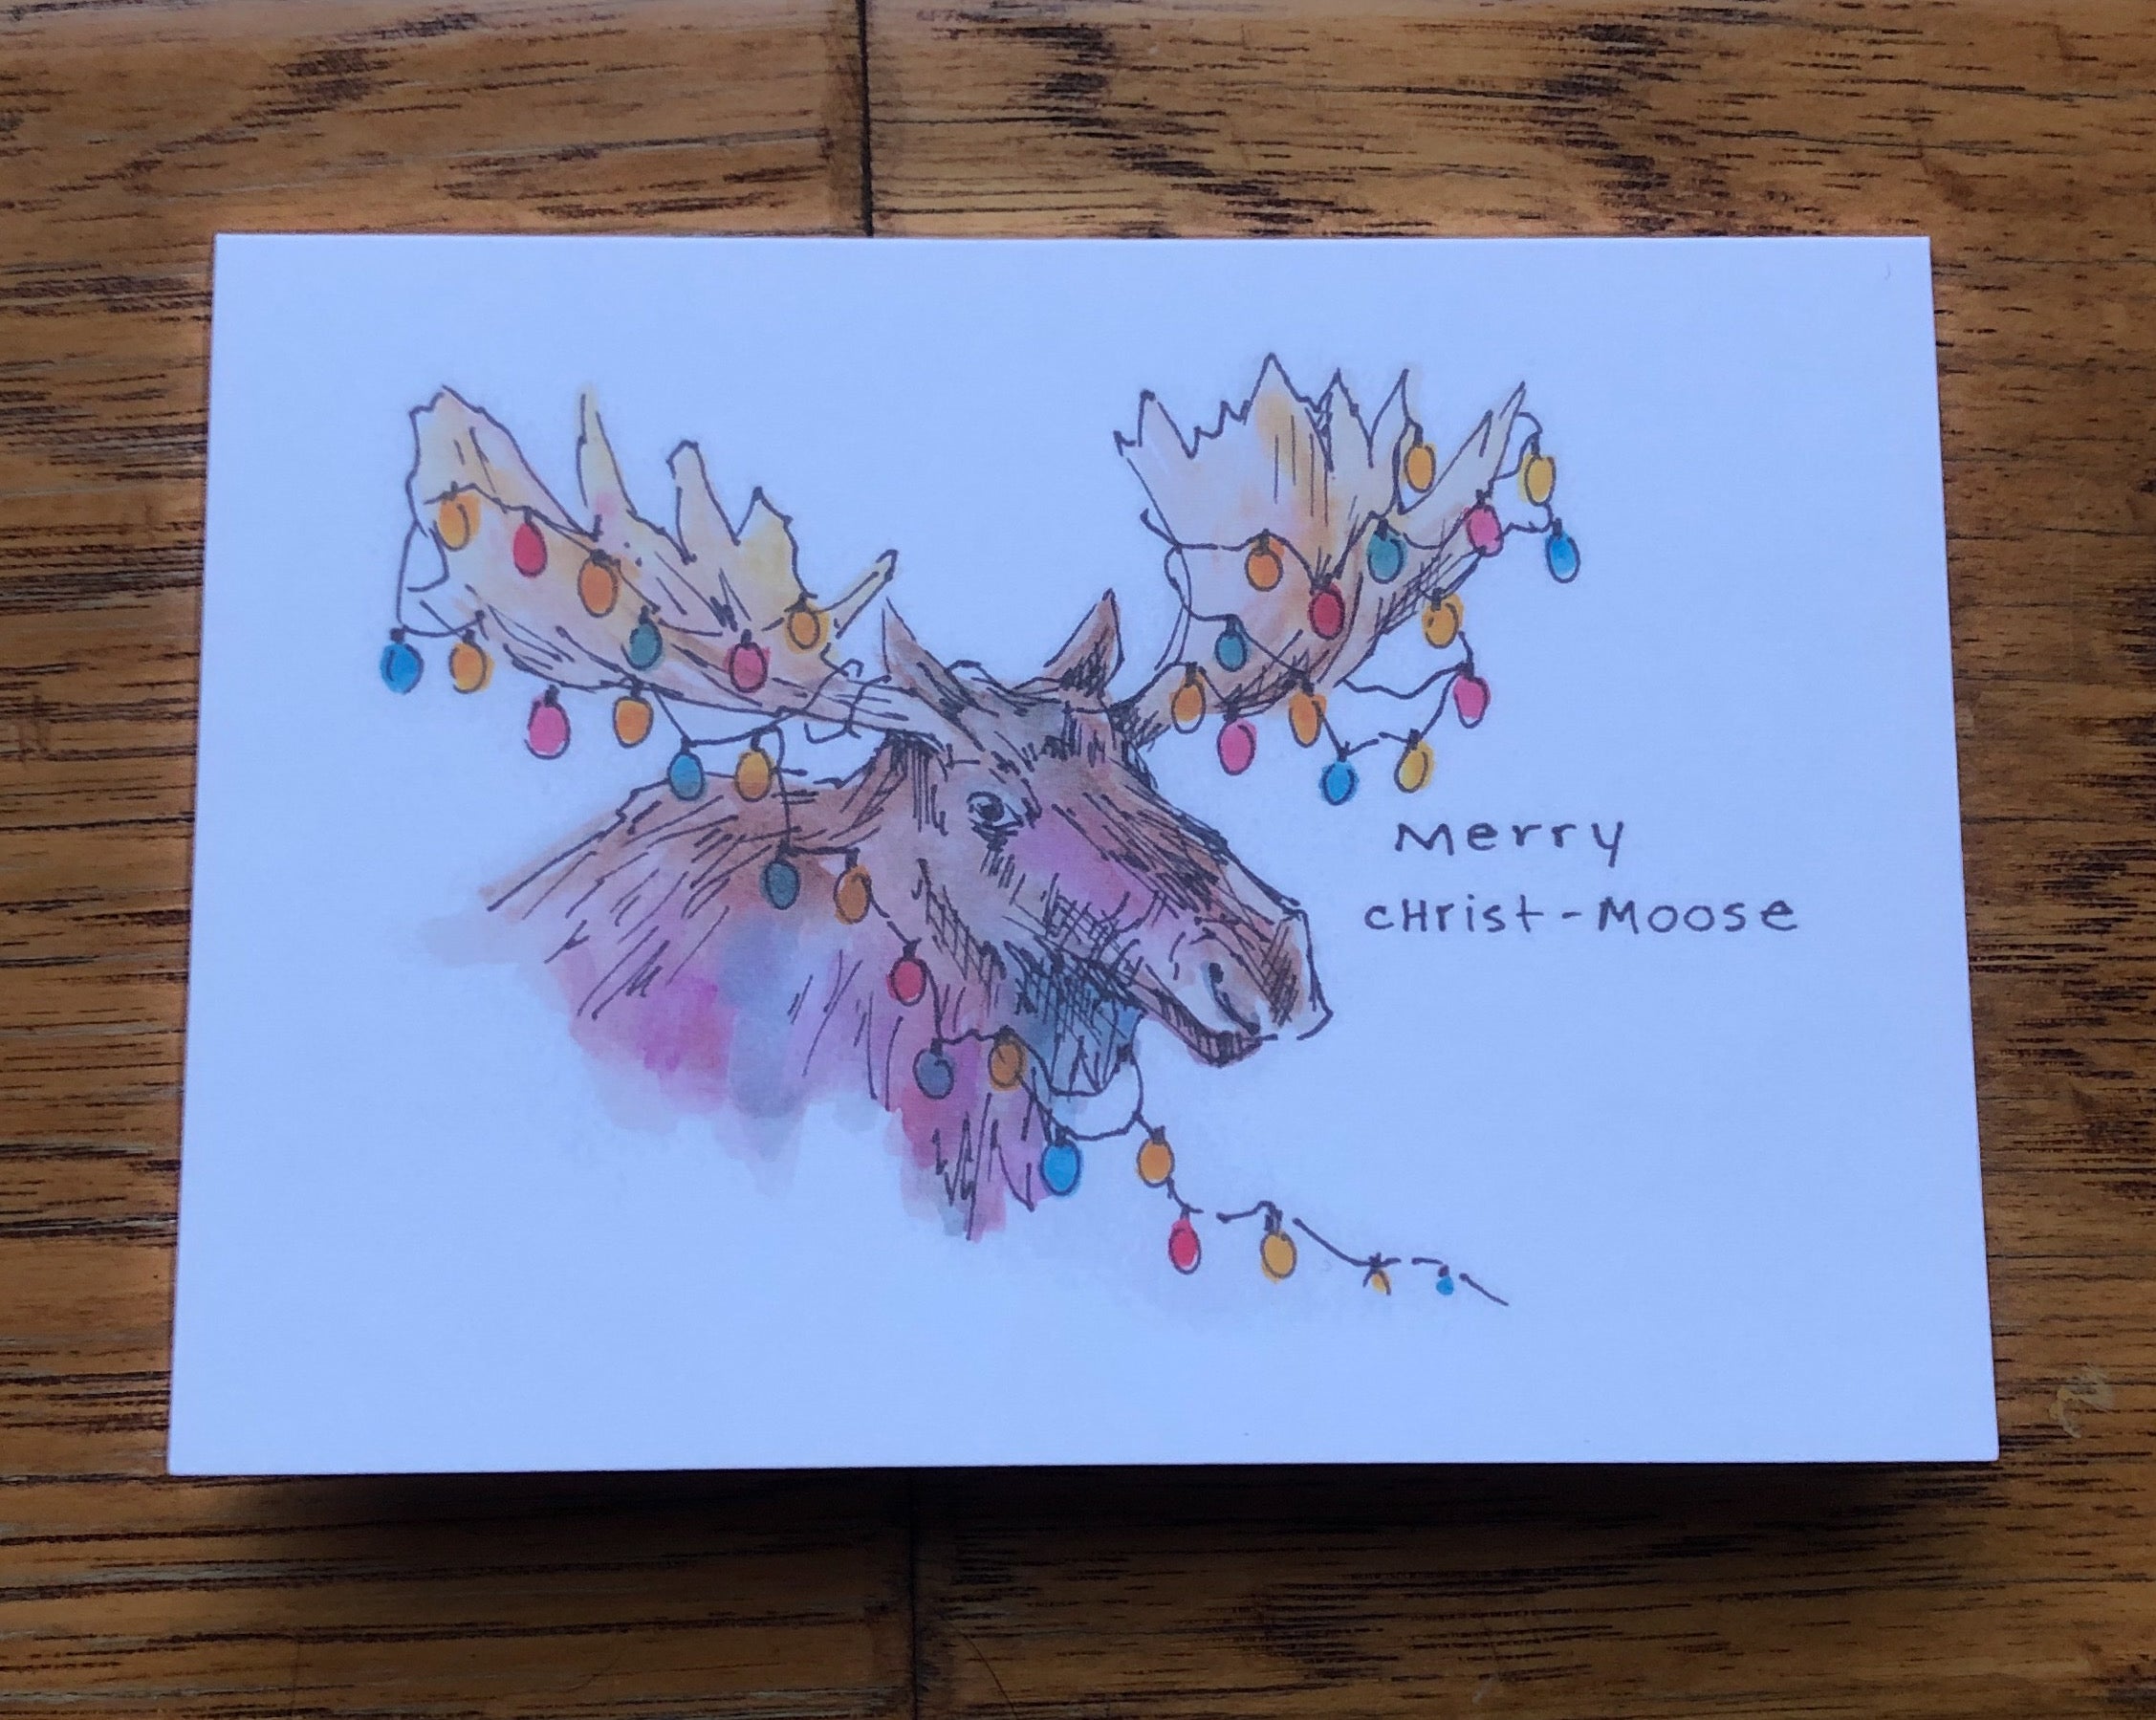 Merry Christ-Moose